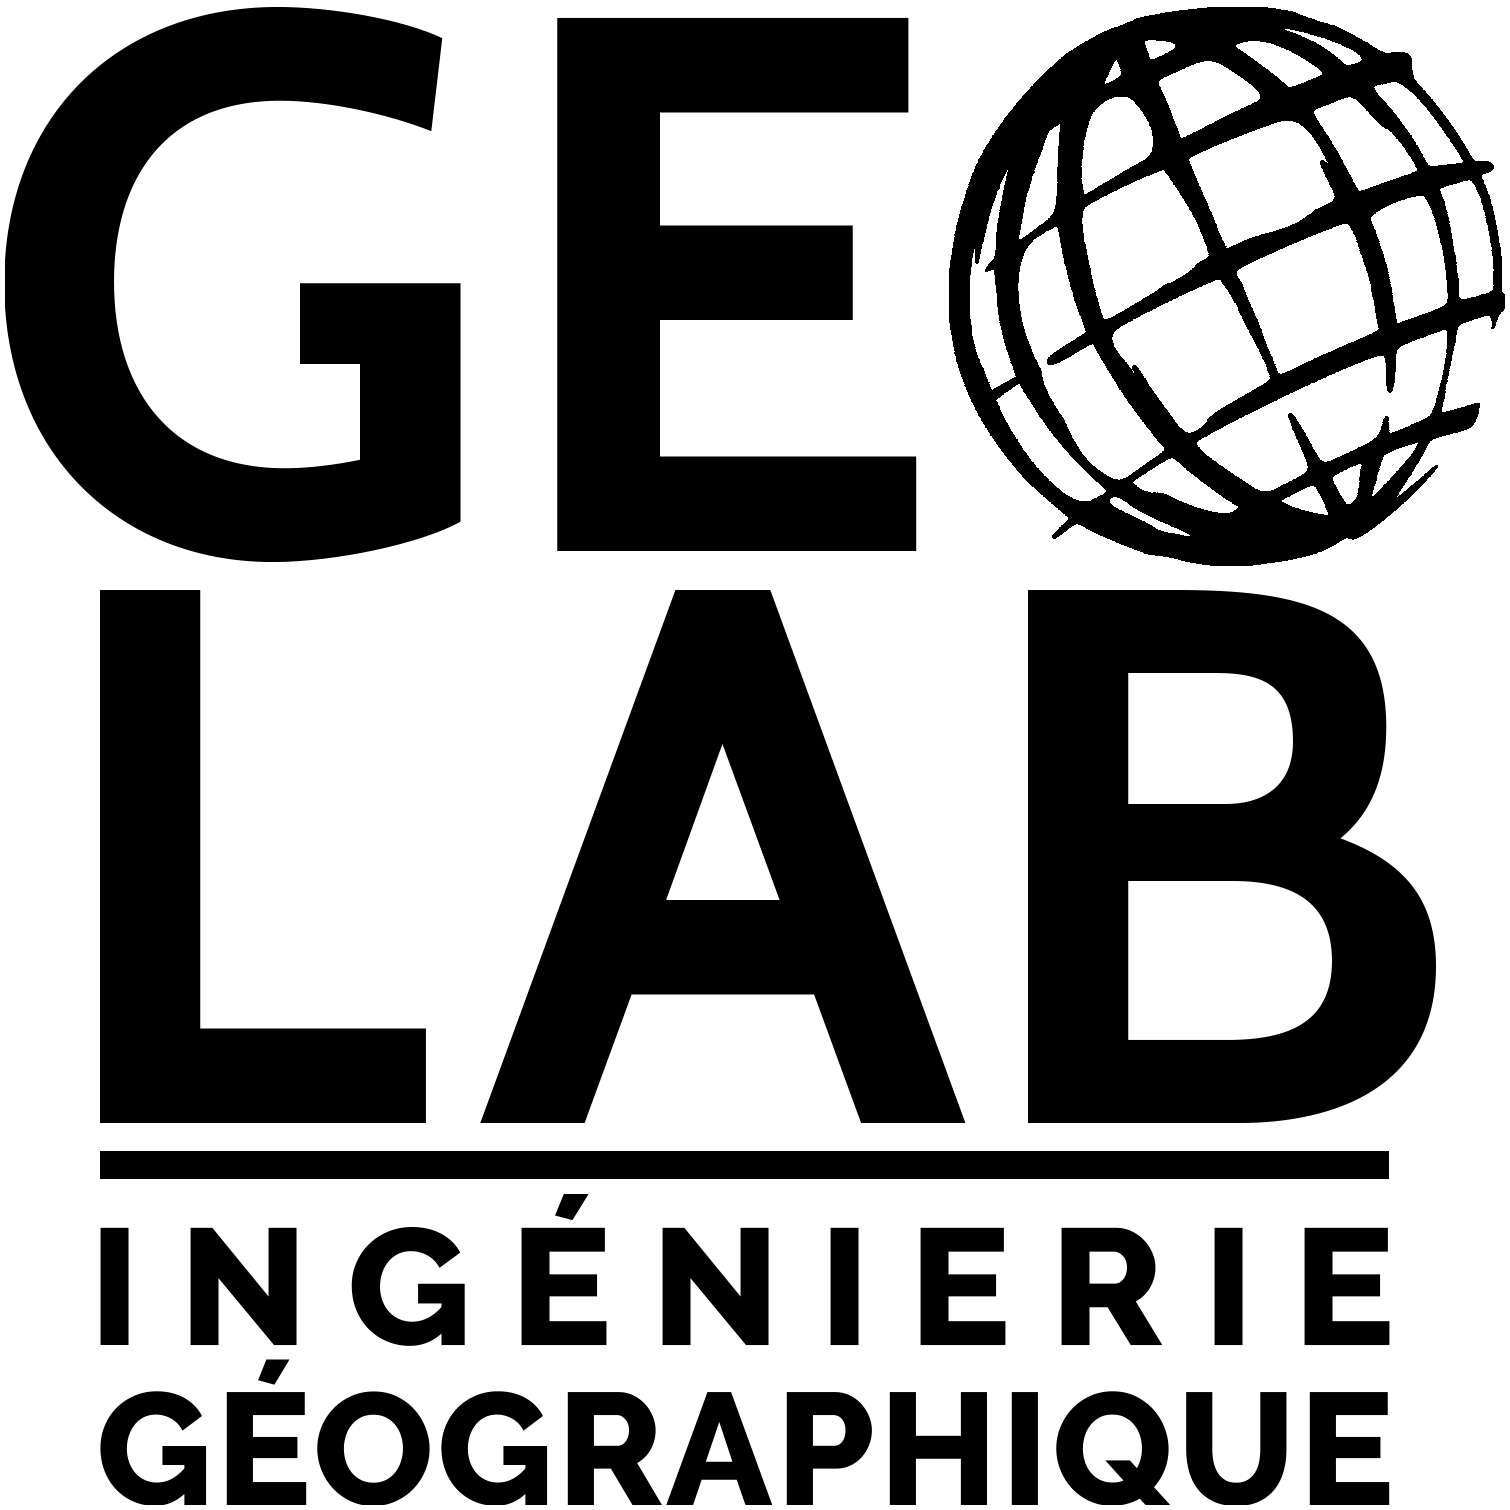 Geolab-Logo-Verti-Noir.png